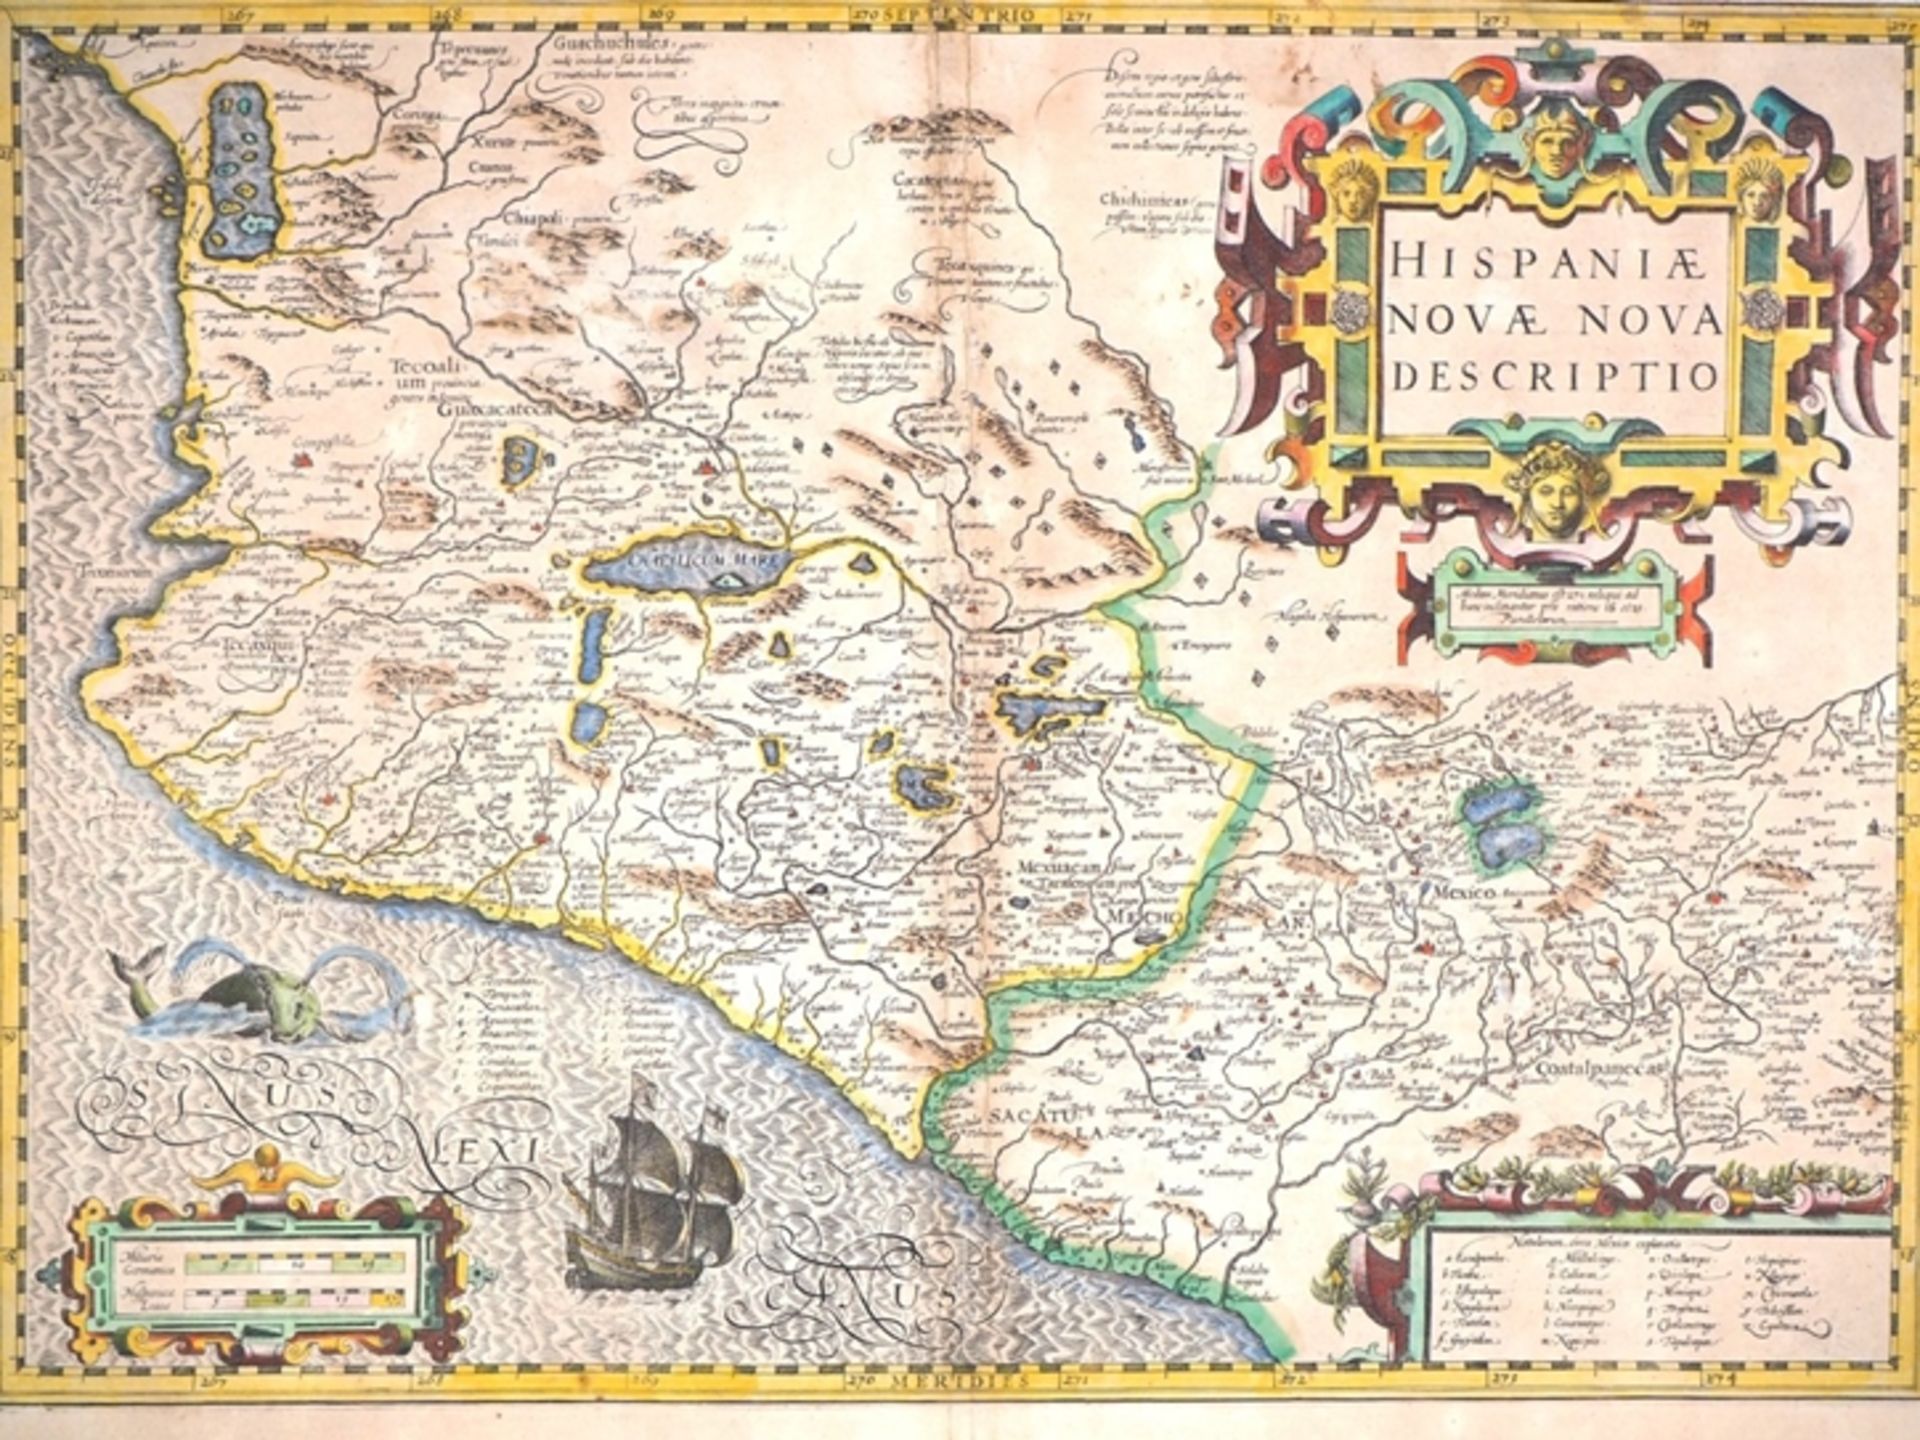 Hispaniae Novae Nova Descriptio, probably 17th century. - Image 2 of 4